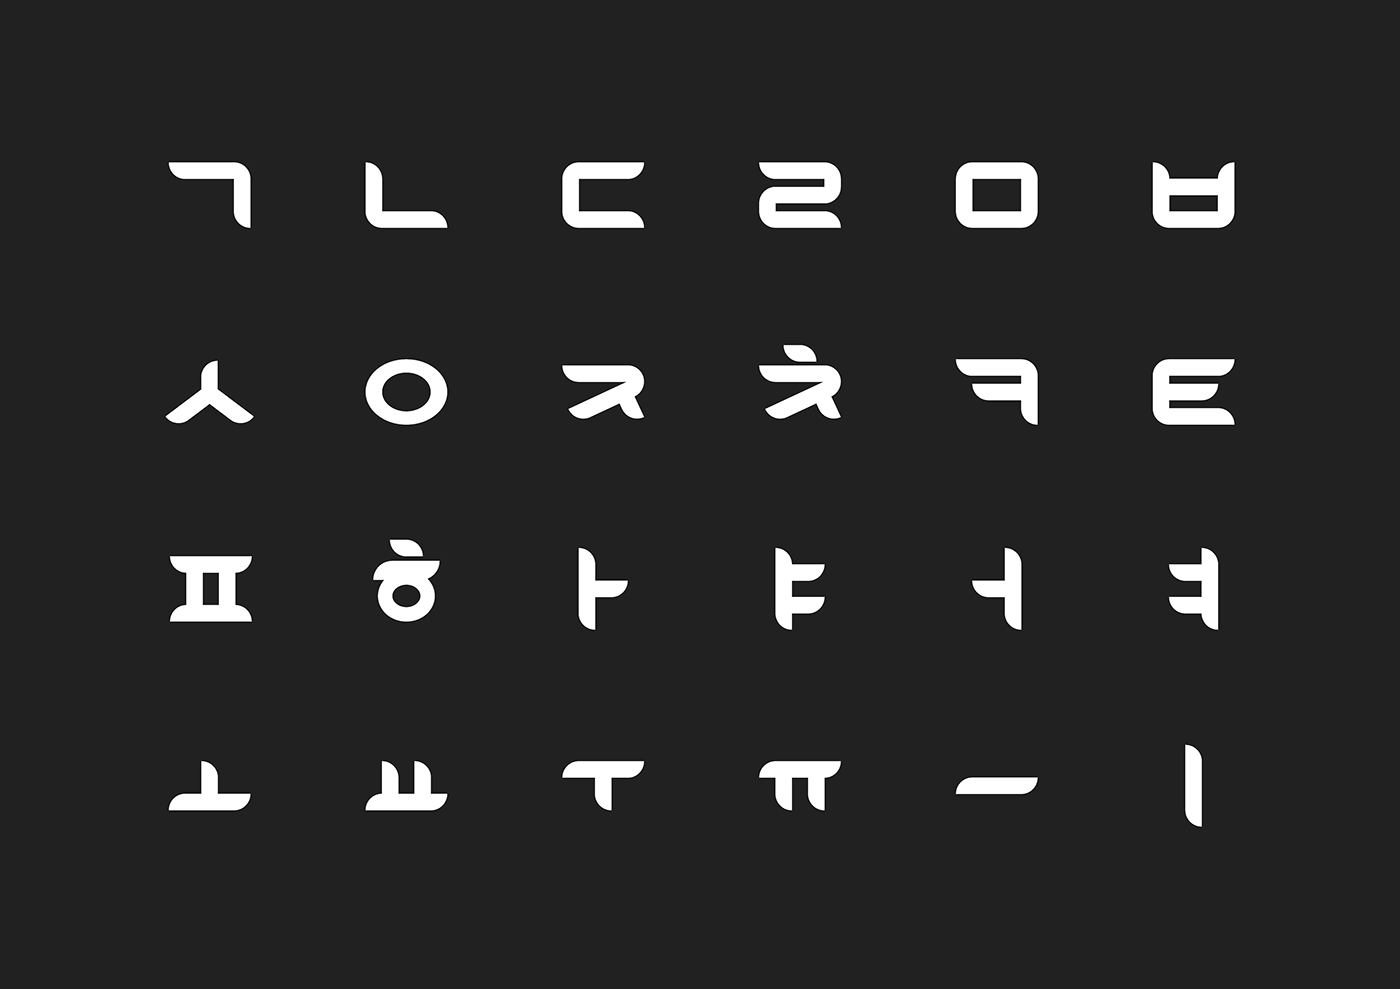 korean type function font typeface design Korea Typeface Hangul Form braun language poster NMP FMP University